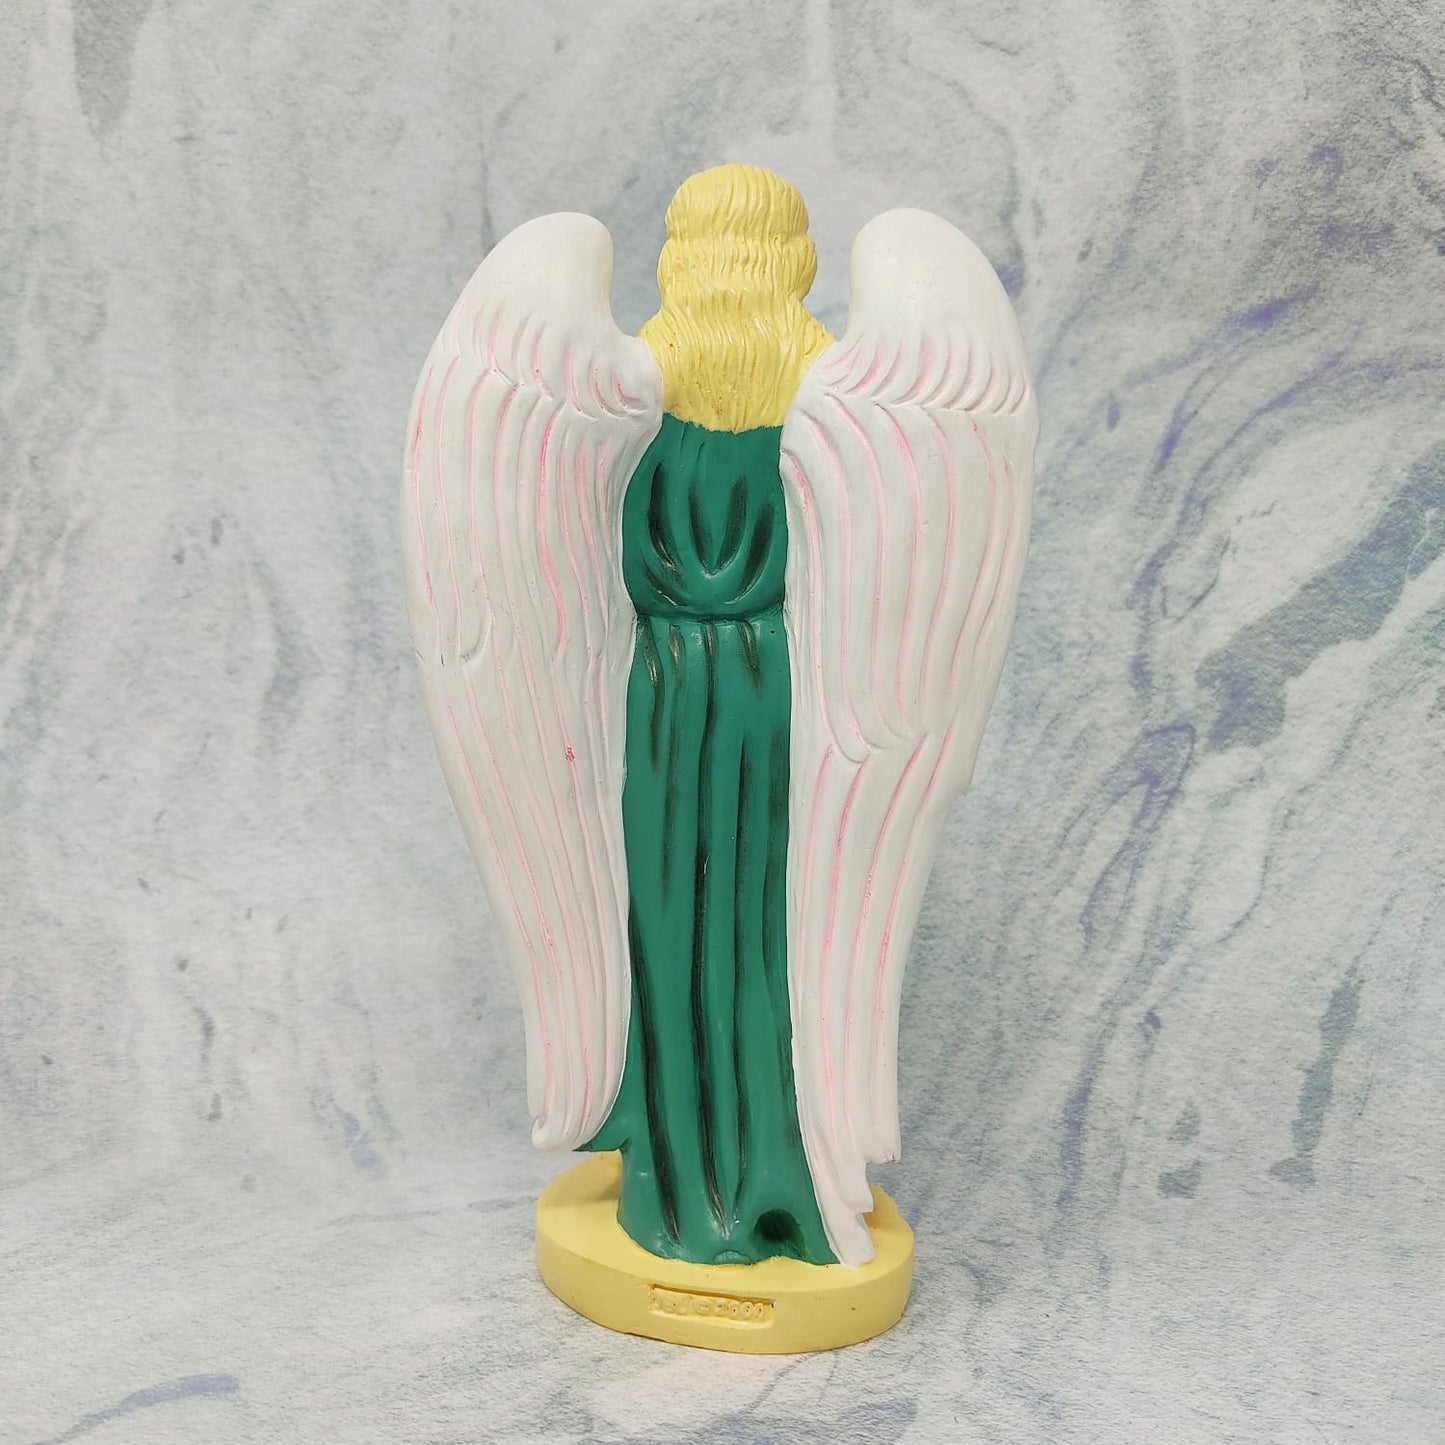 Archangel Gabriel Statue Catholic Handmade Saint Messenger of God Figurine 8.25"